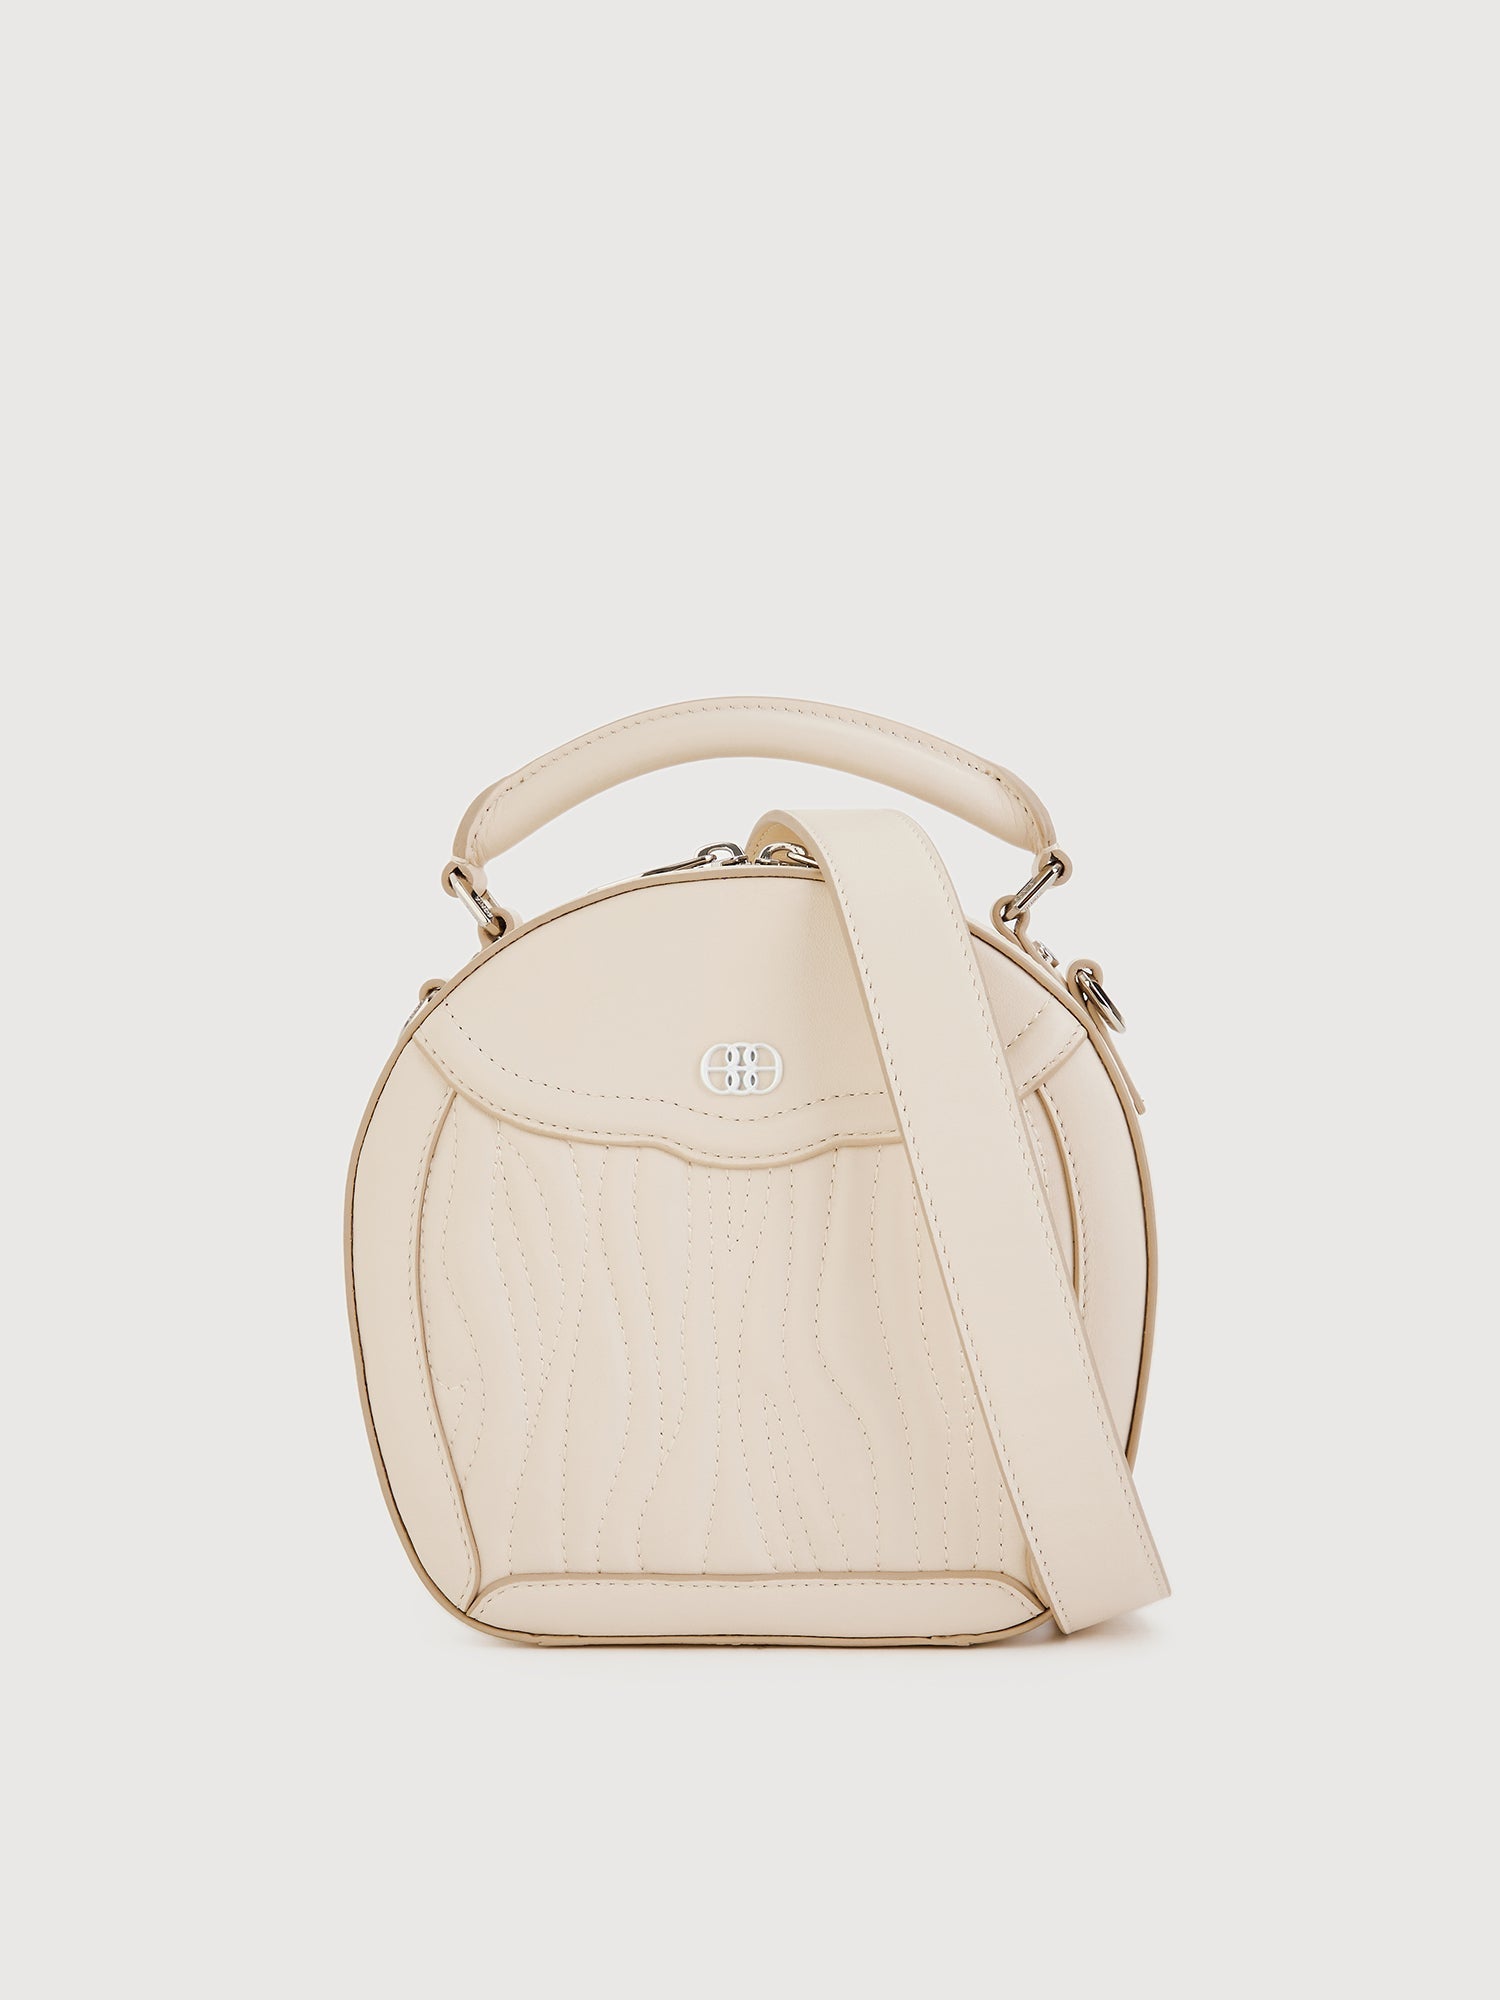 limited edition handbag bonia original 2019